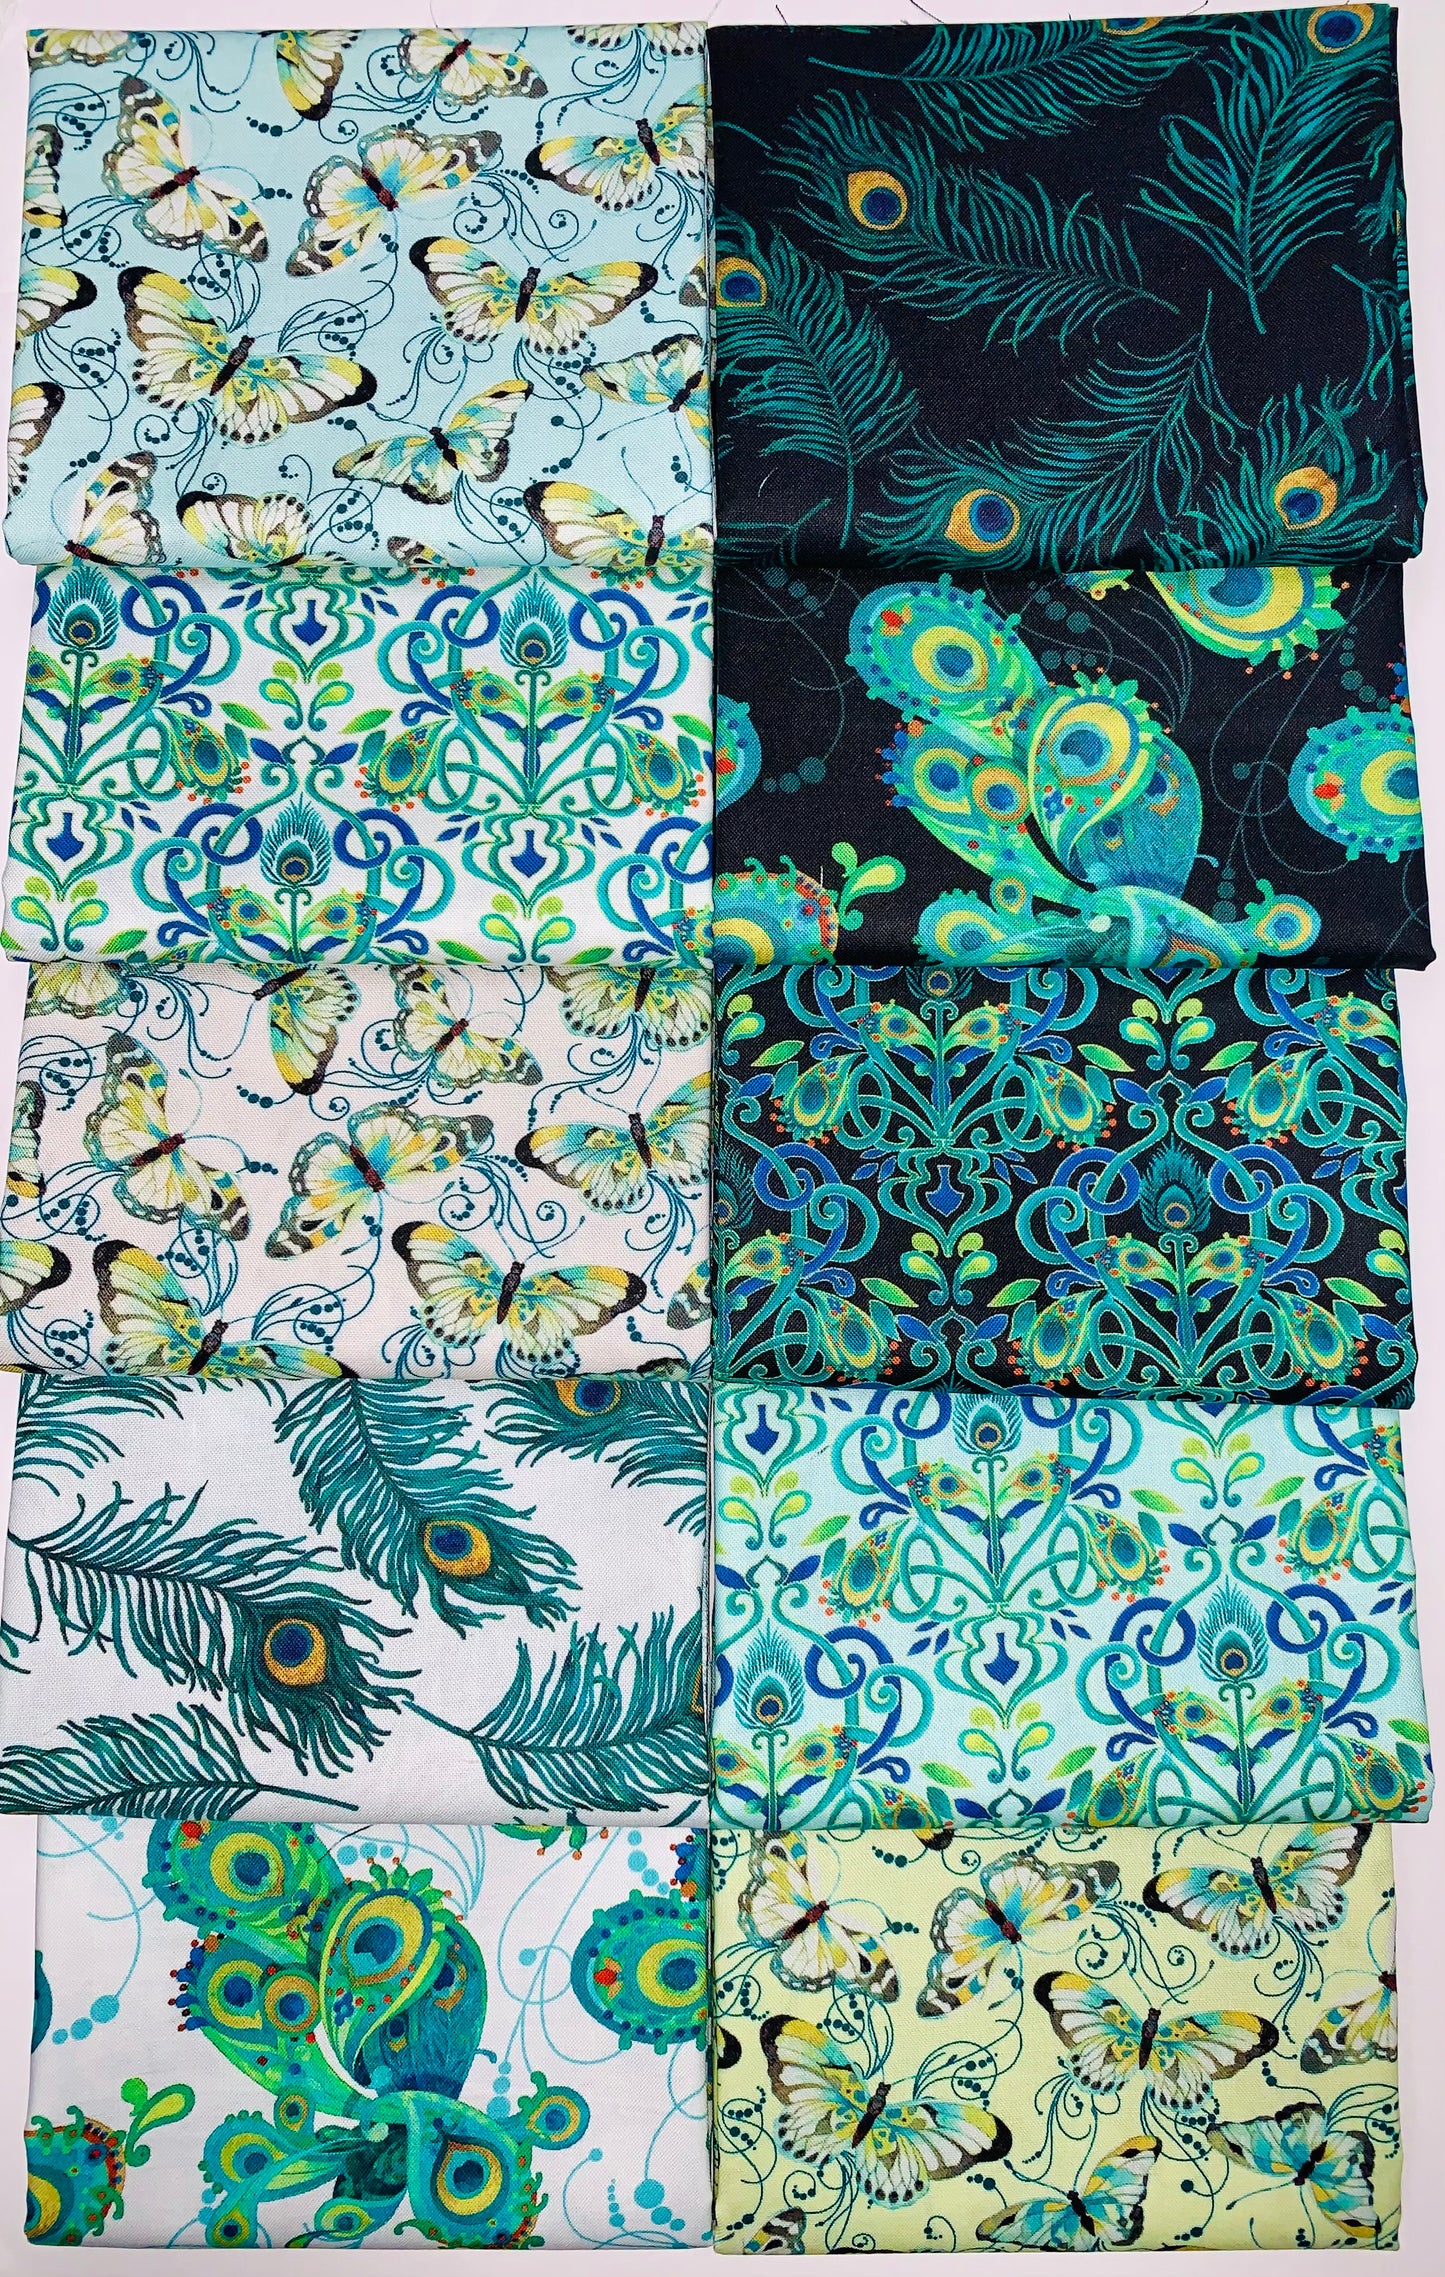 Benartex "Peacock Symphony" (Peacock) Half-Yard Bundle - 10 Fabrics, 5 Total Yards